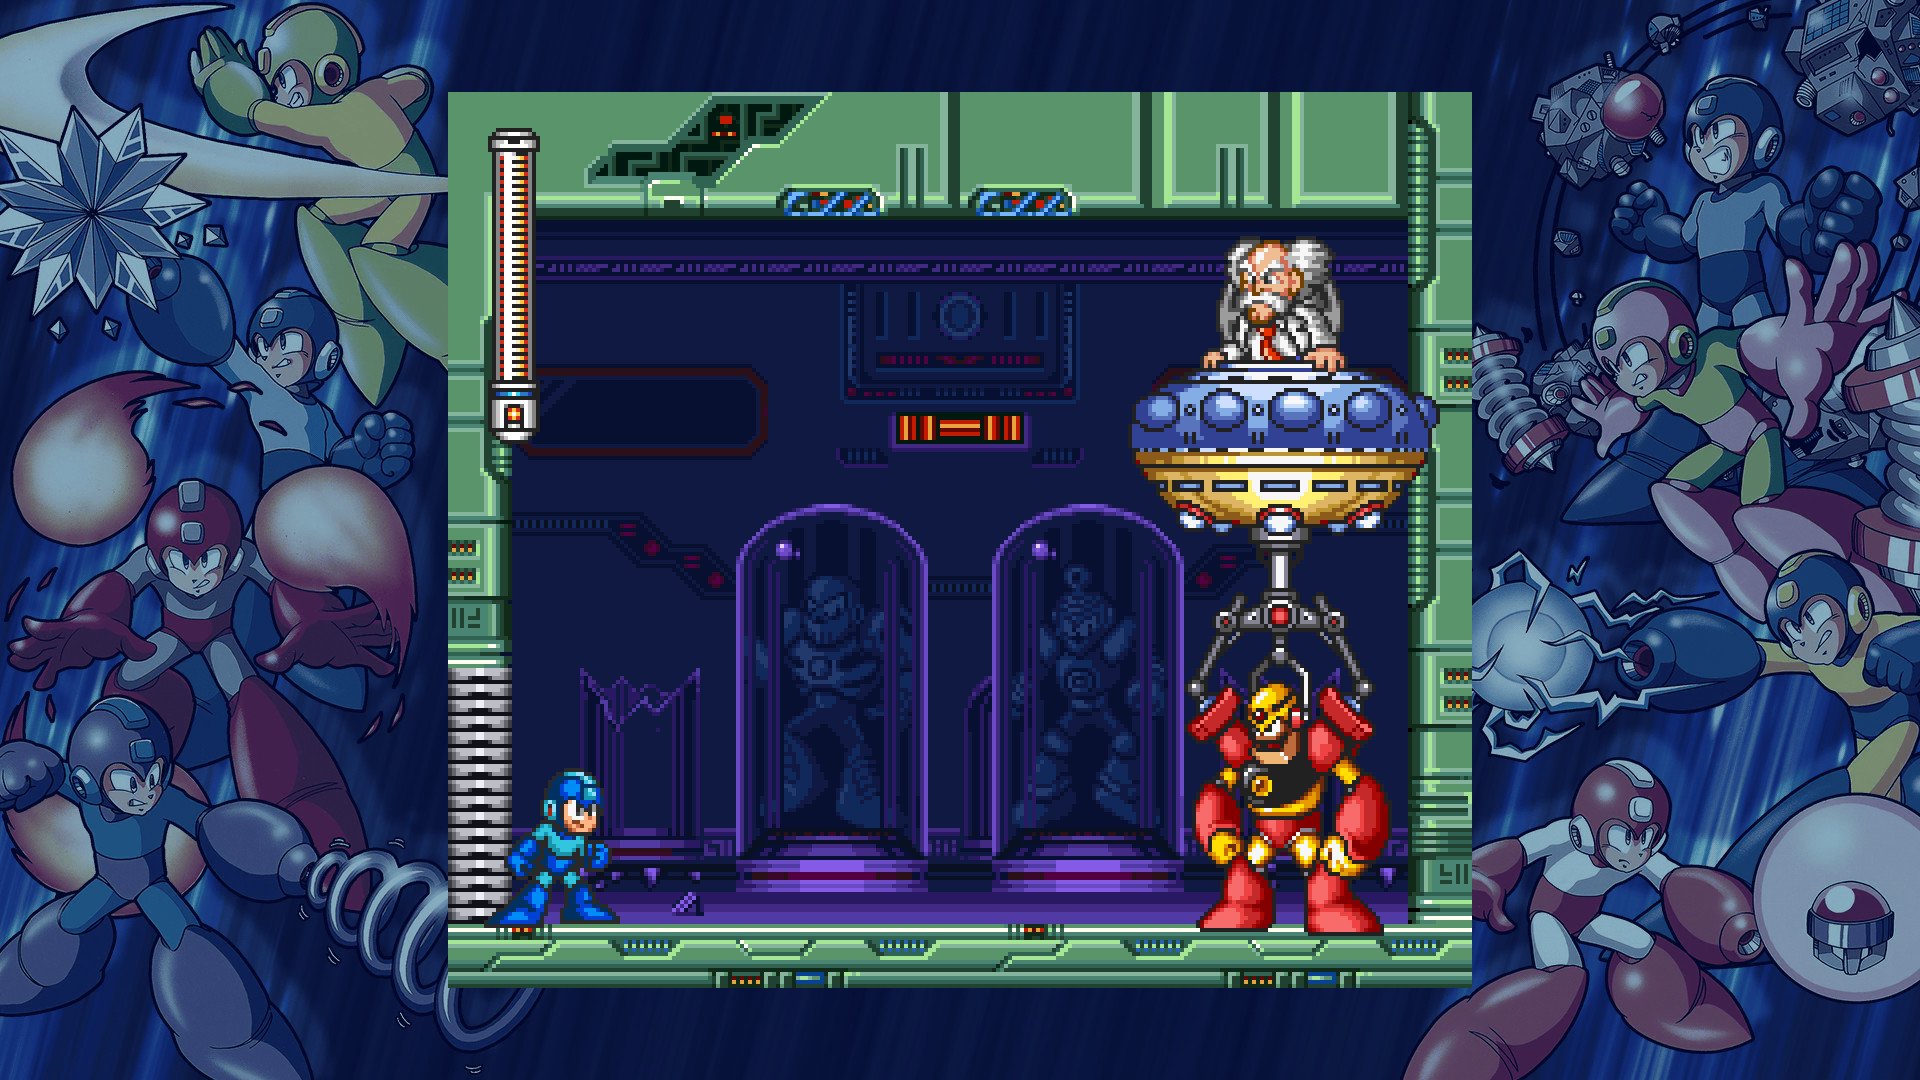 Mega Man Legacy Collection 2 2